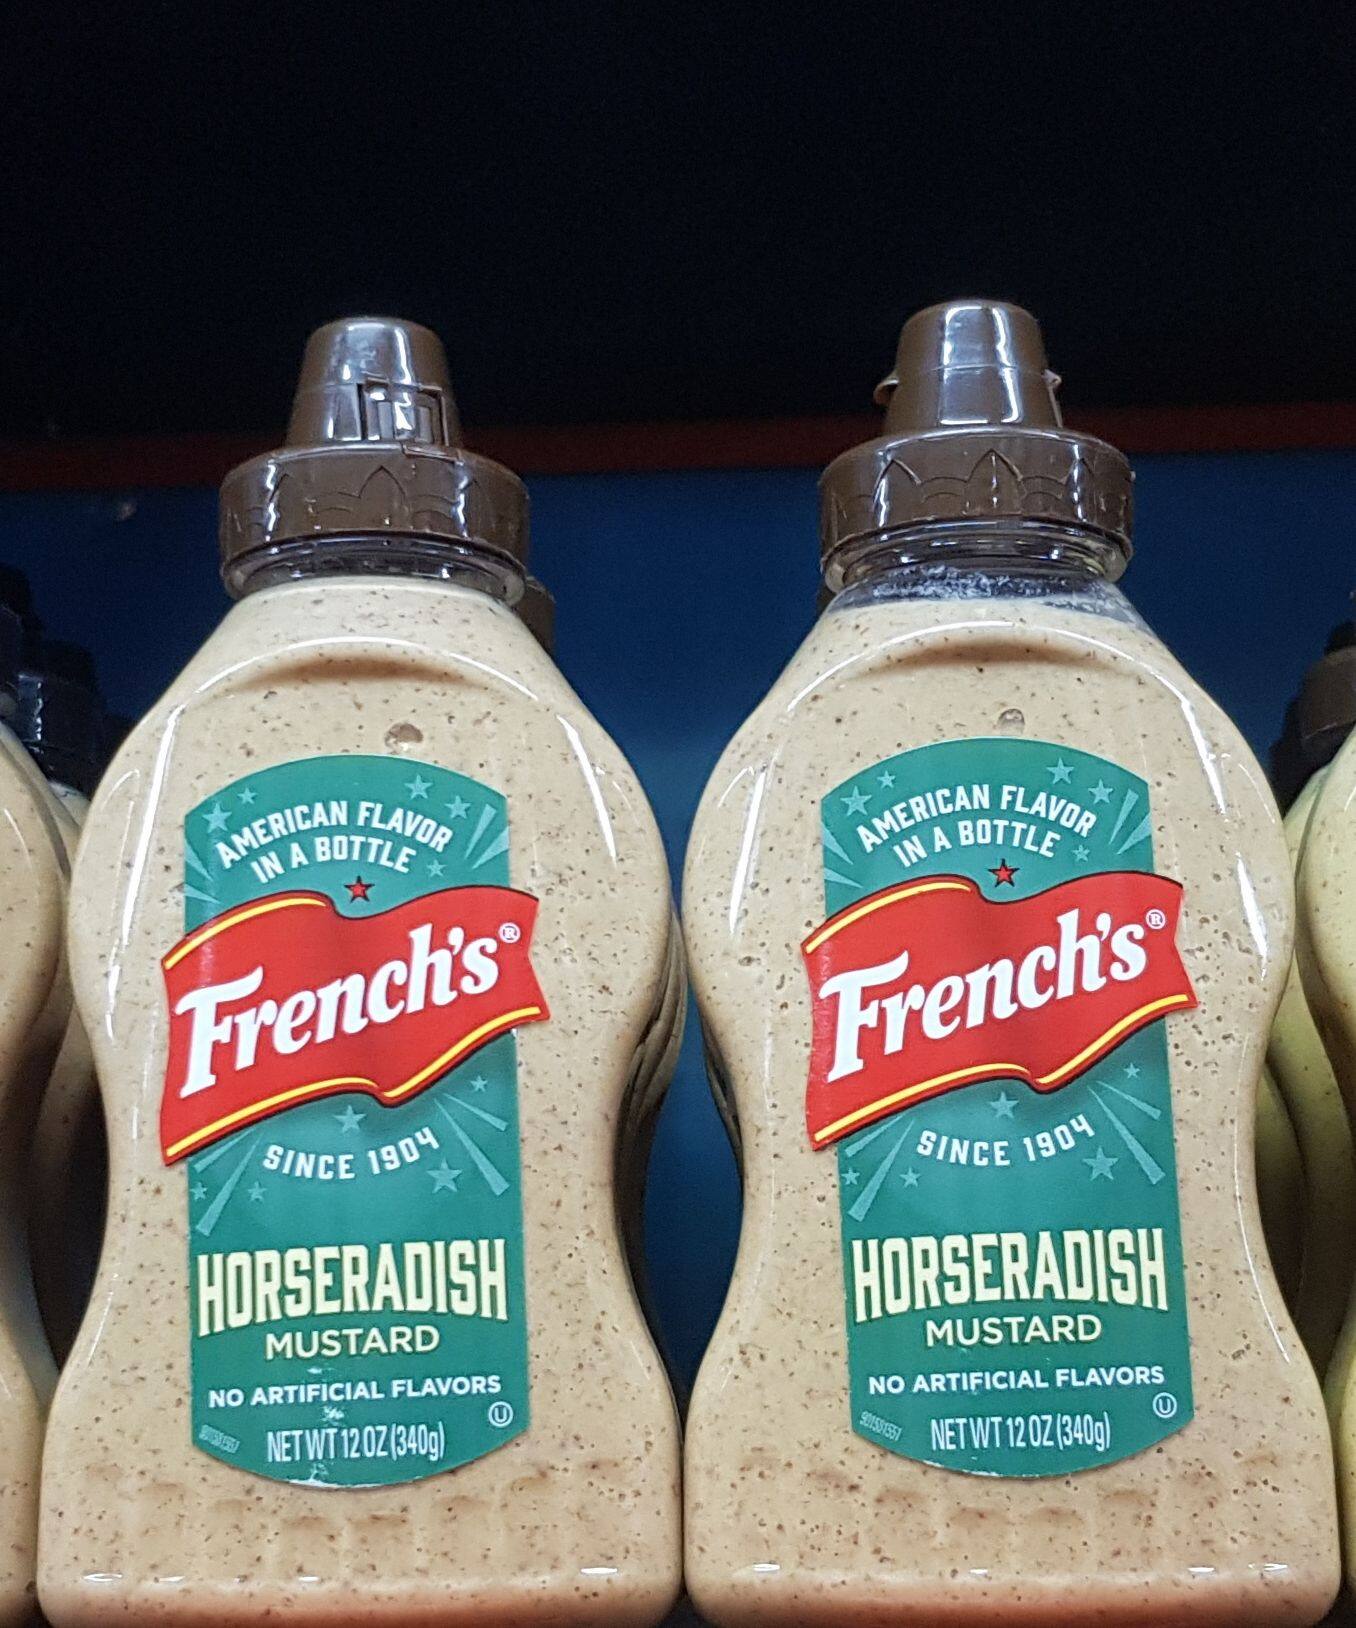 French's Horseradish Mustard 340 g. เฟร้นช์ ฮอร์สแรดิช มัสตาร์ด 340 กรัม